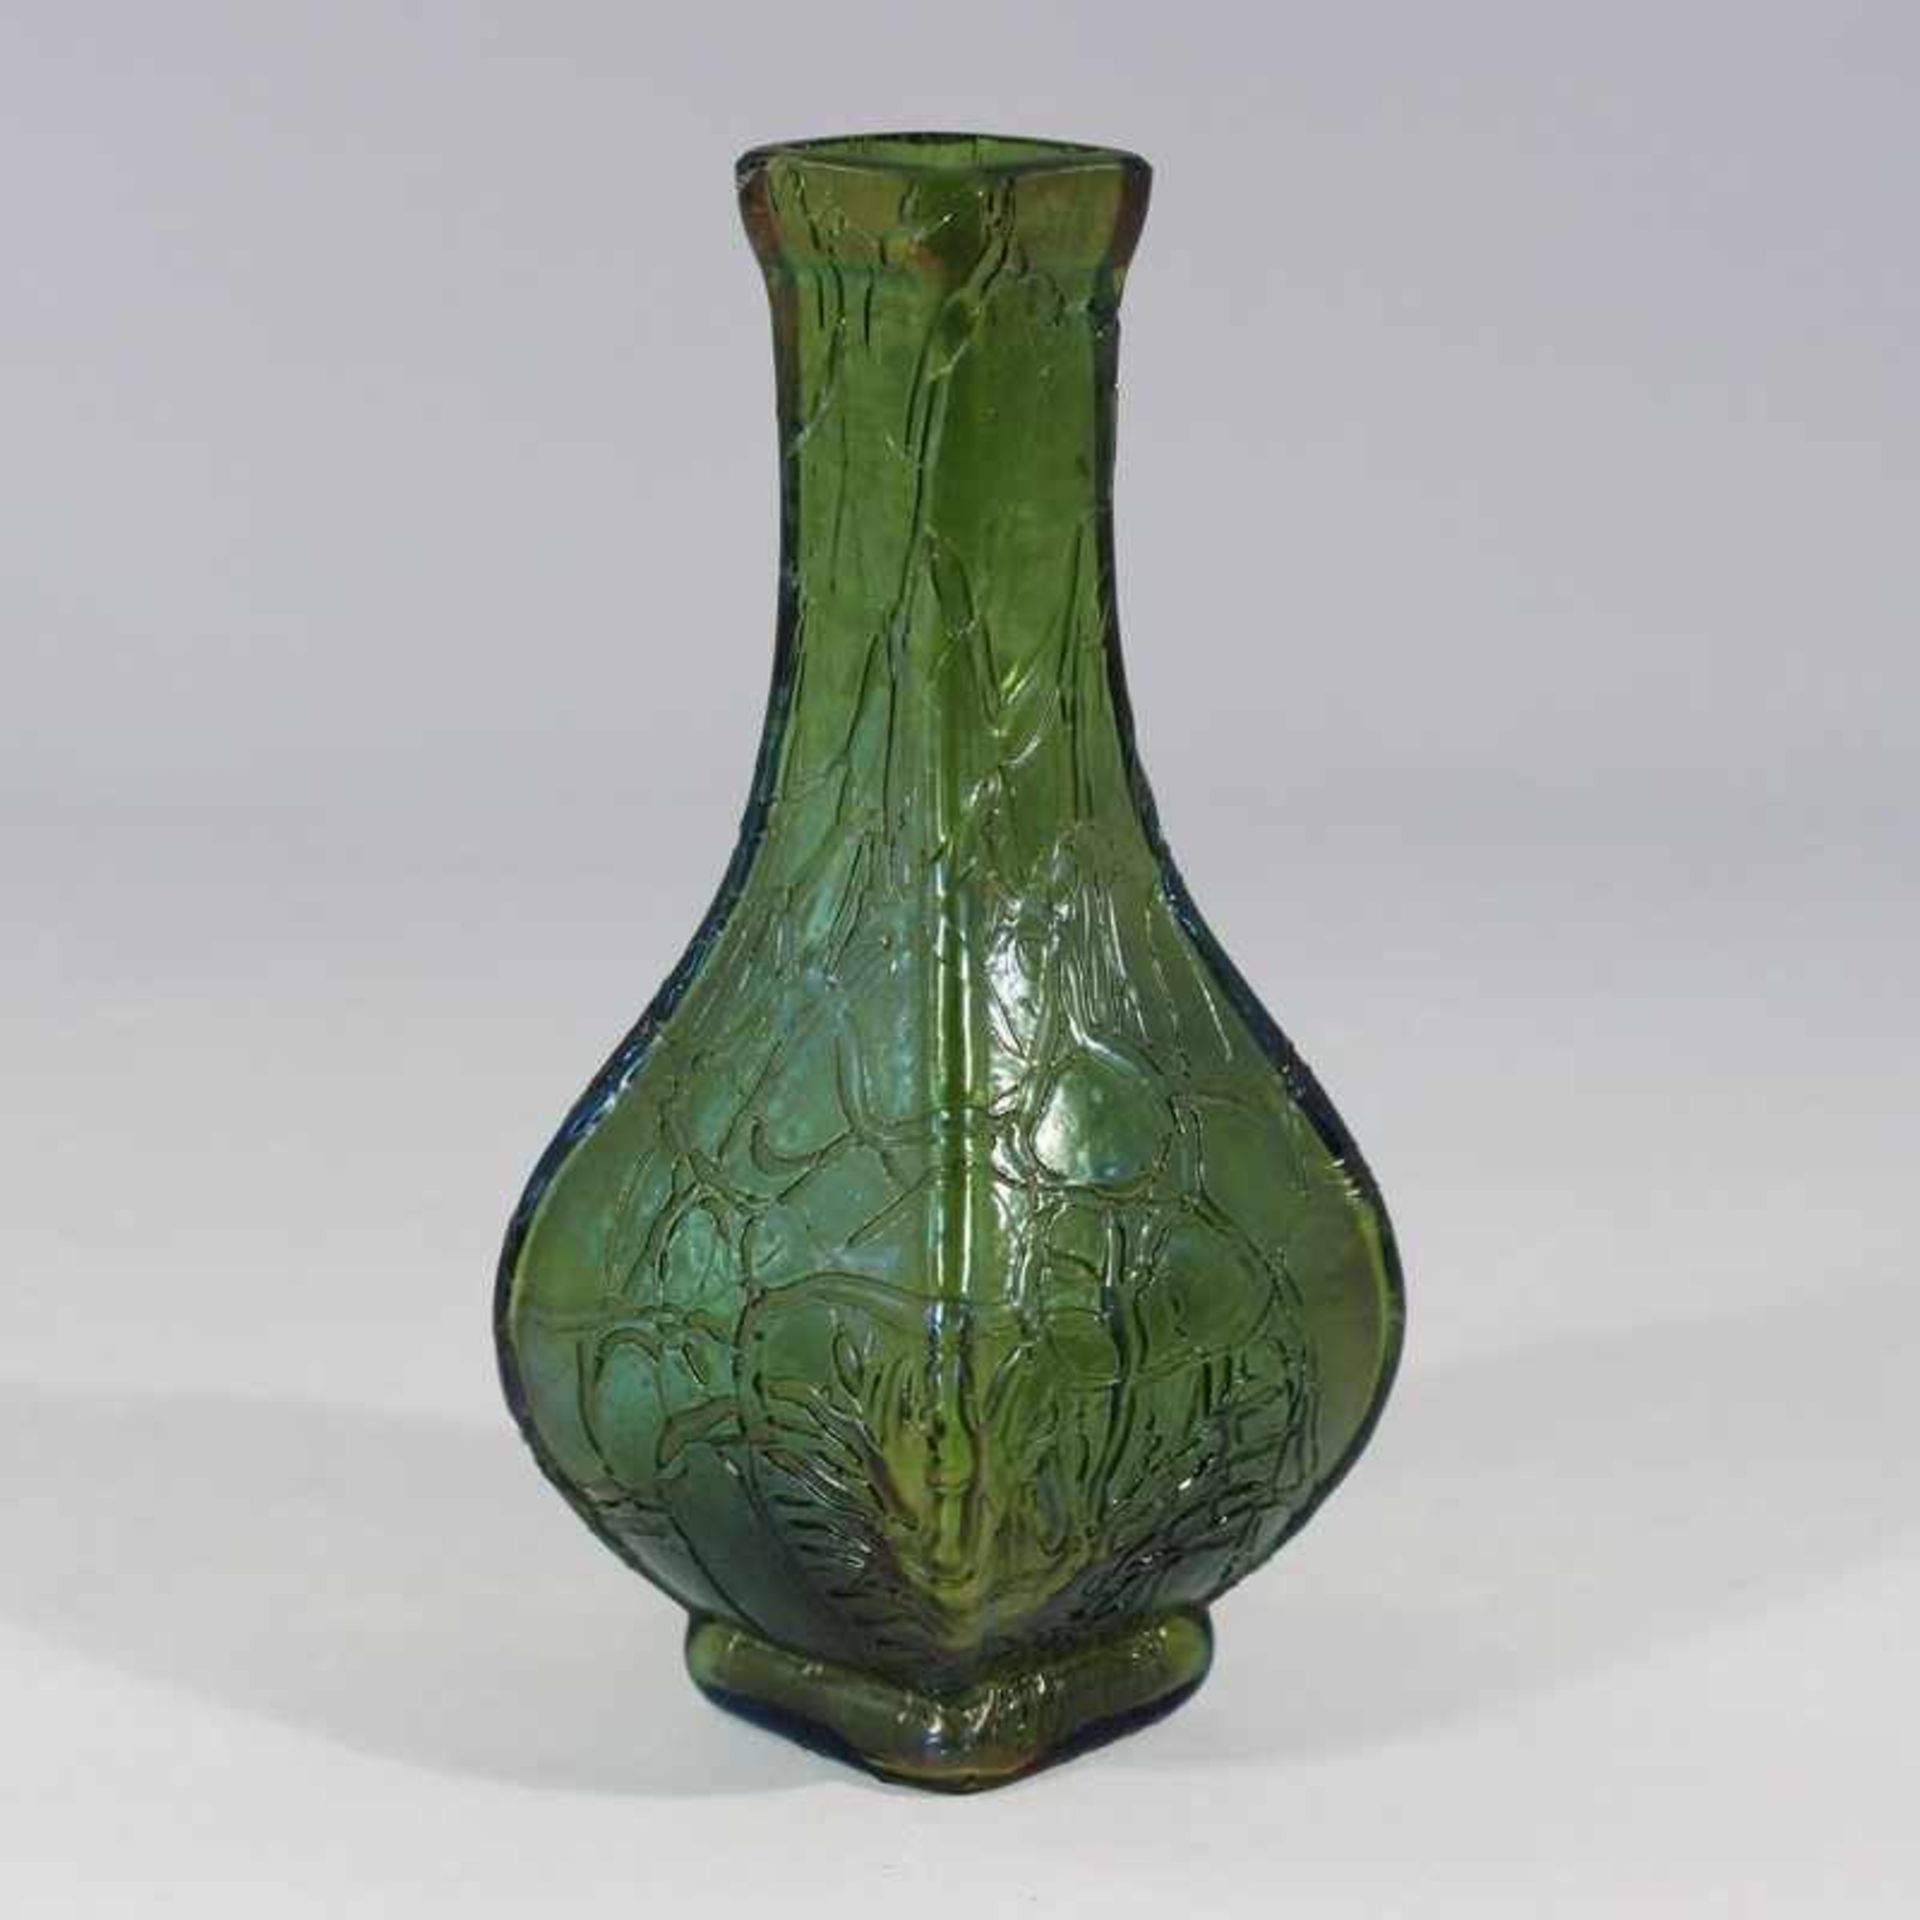 Kralik - Vase um 1900, wohl Wilhelm Kralik Sohn, Eleonorenhain, farbloses Glas, grün überfangen,